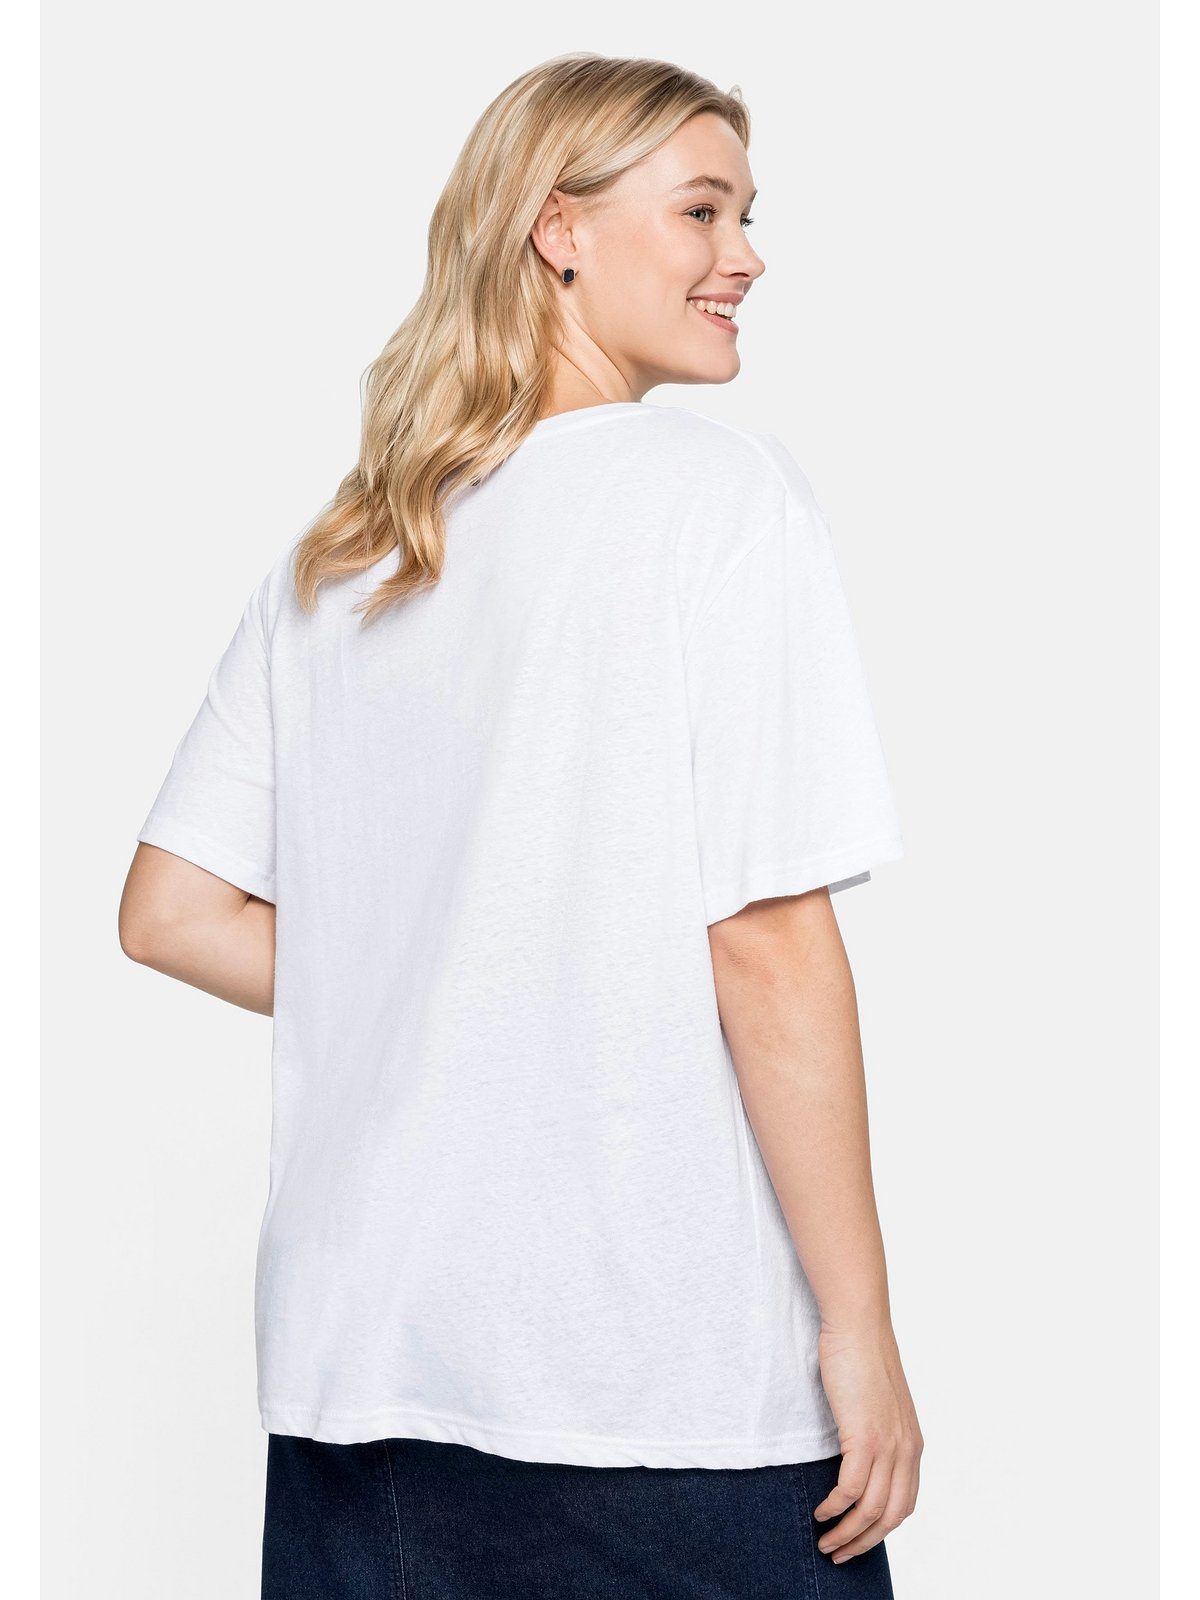 Sheego T-Shirt Große edlem aus Leinen-Viskose-Mix weiß Größen